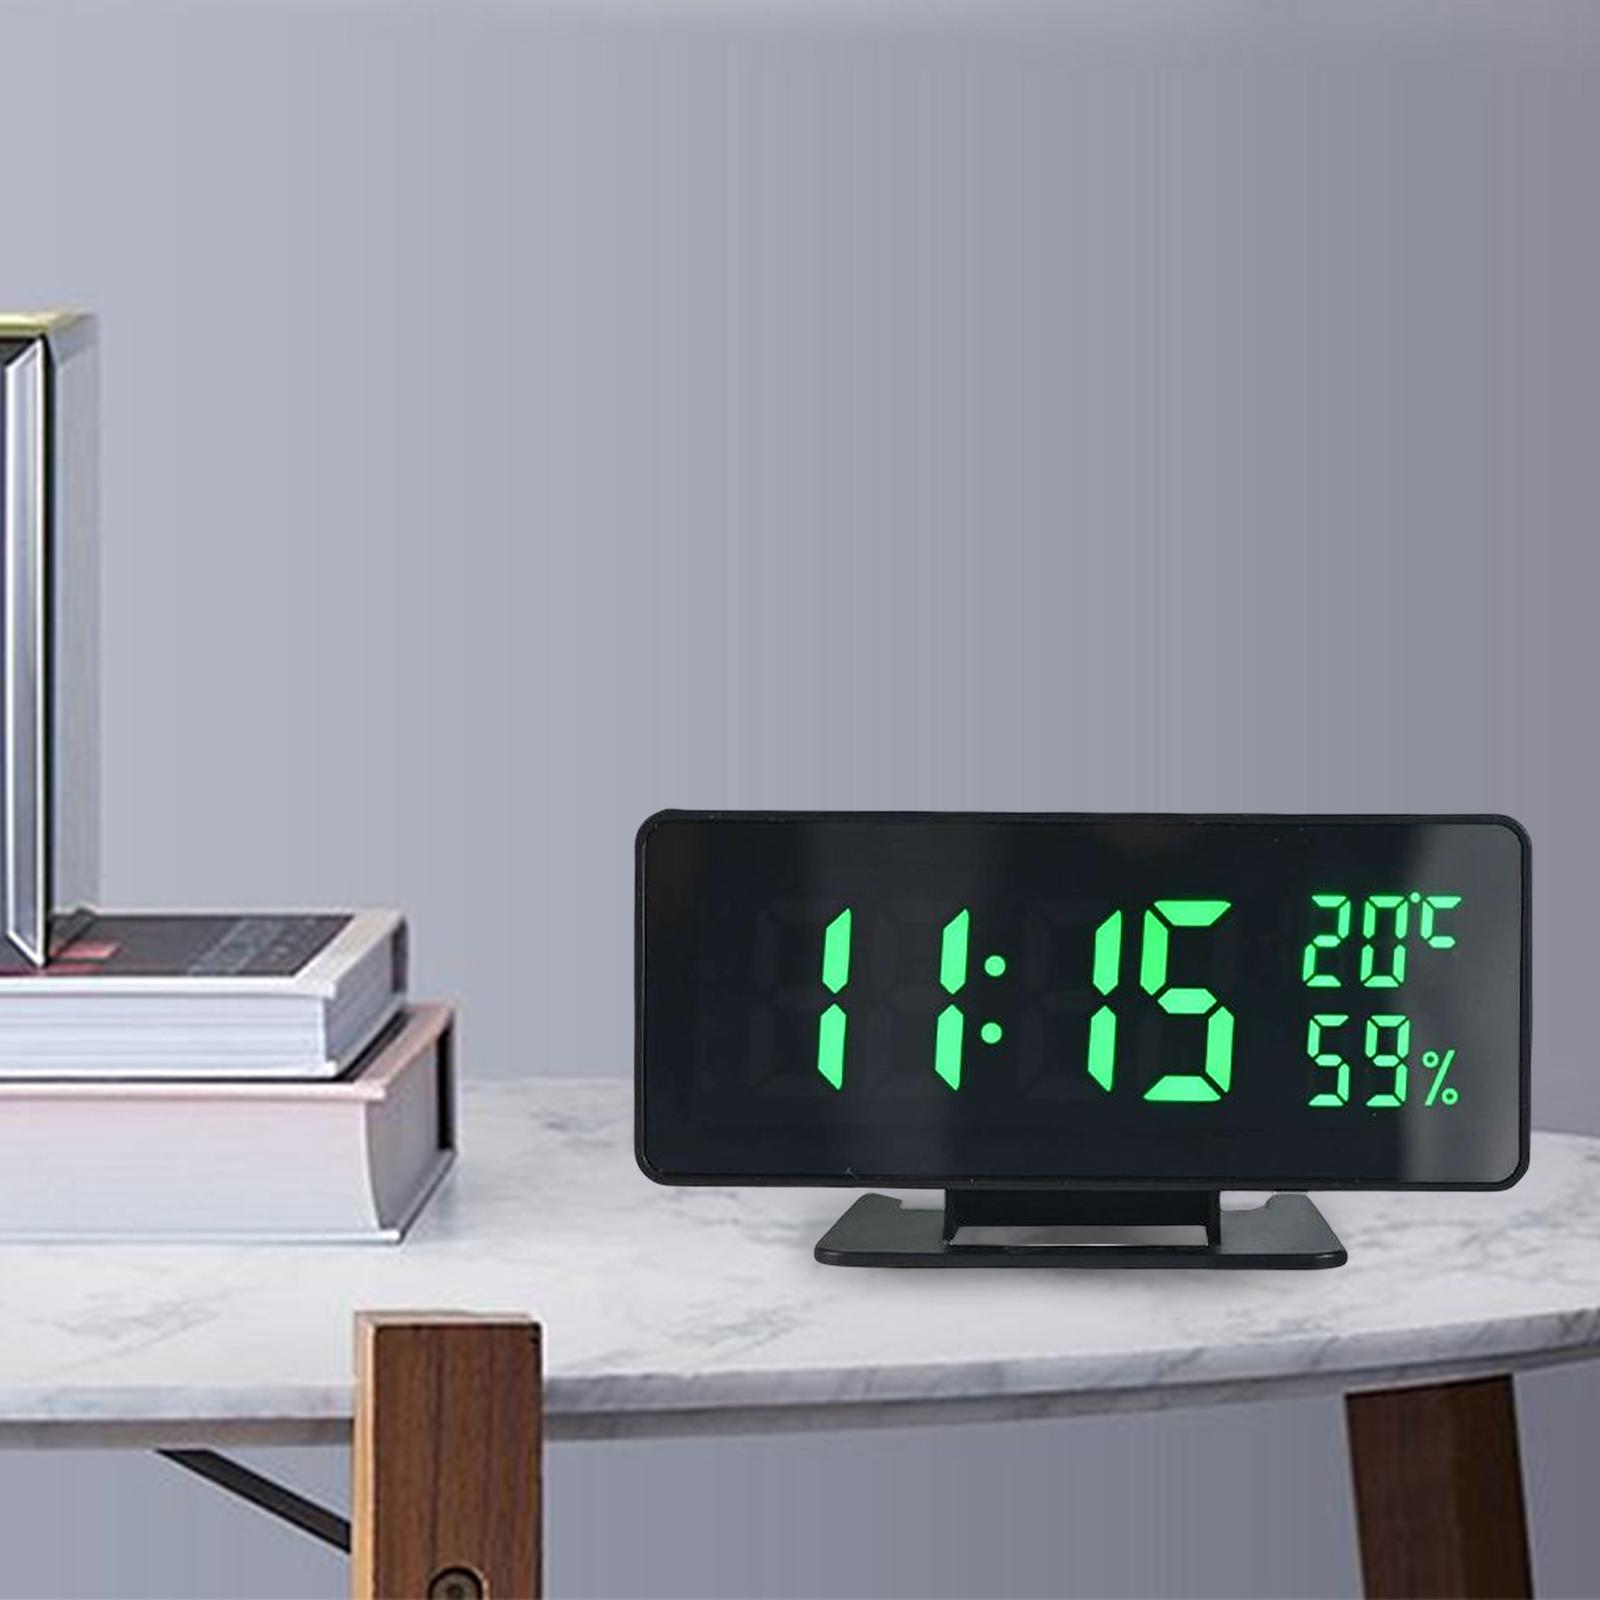 USB Digital Alarm Clock Date Display Bedroom Home Decor Decorative LED Green